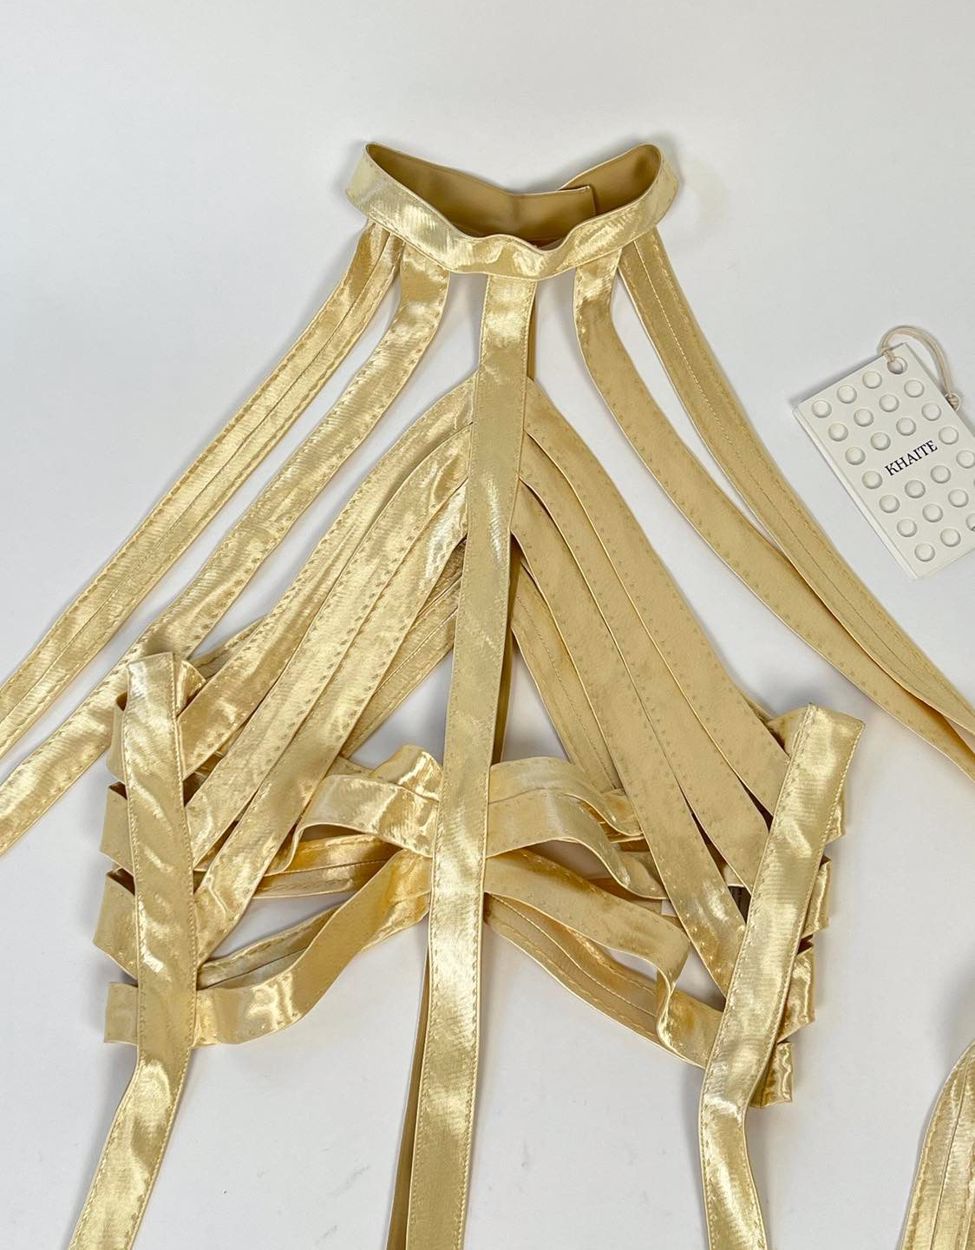 Khaite top sukey harness Gold size s